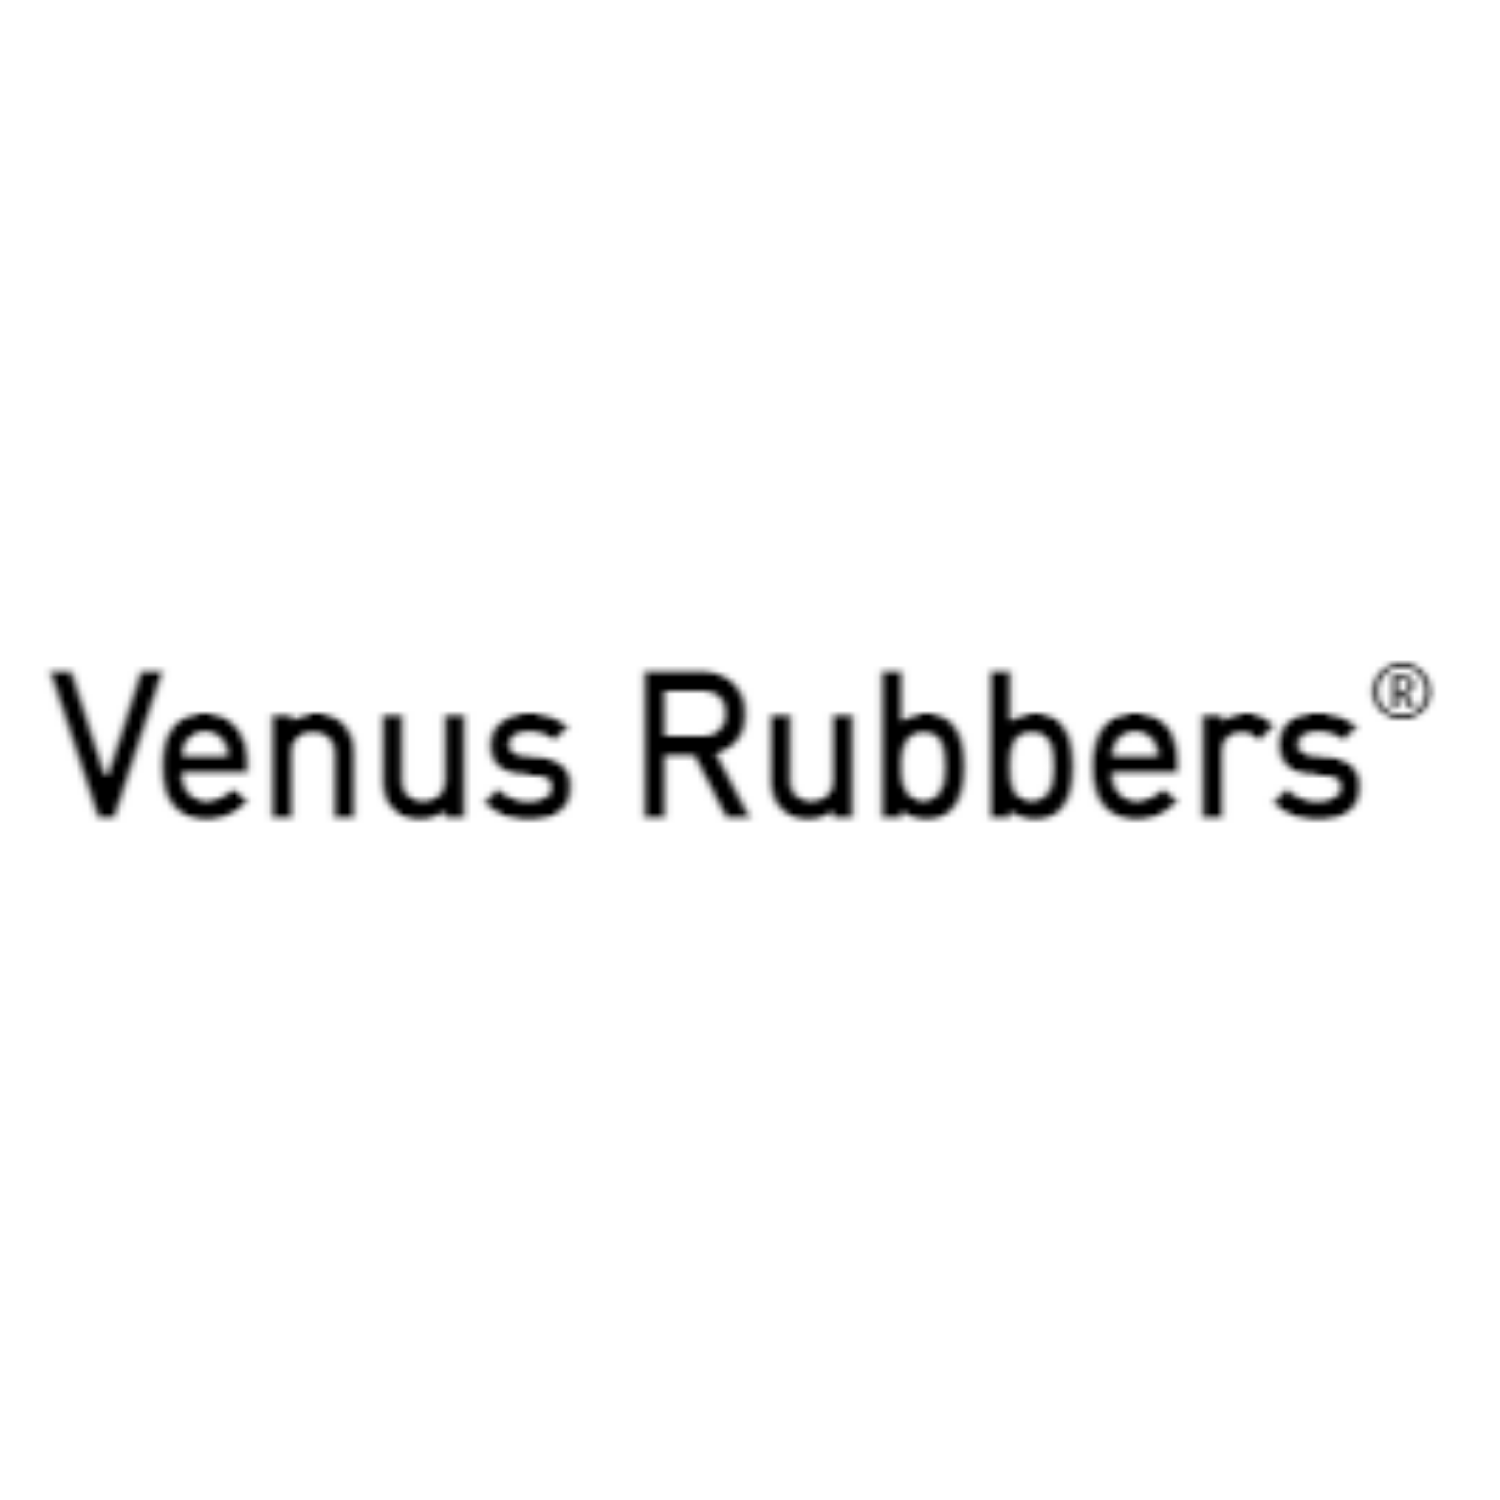 Avatar: VenusRubbers